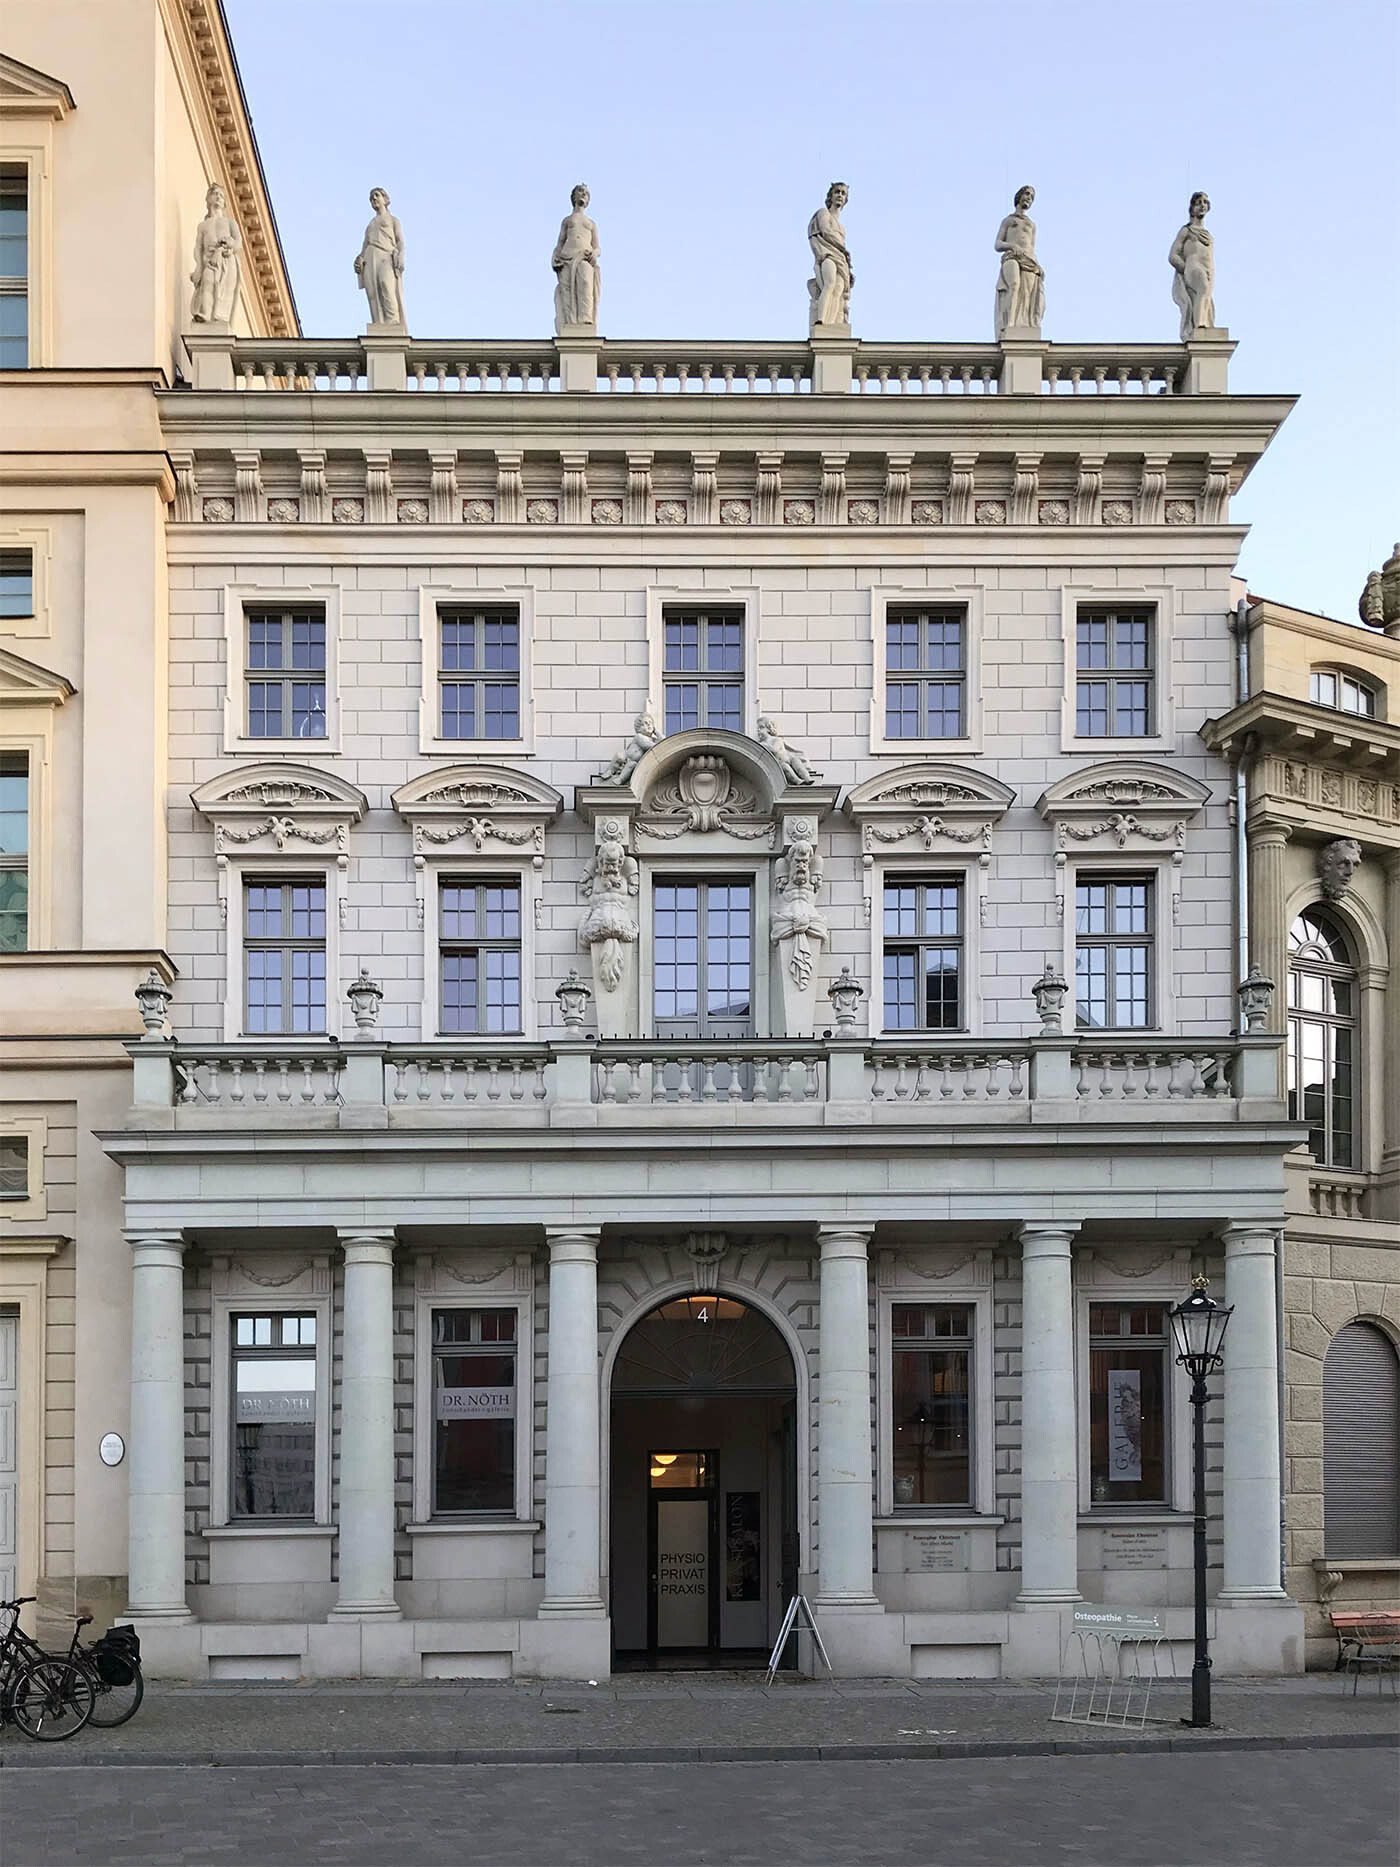 Foto: Neubau der Humboldtstraße 4 mit rekonstruierter Fassade des Palazzo Chiericati.